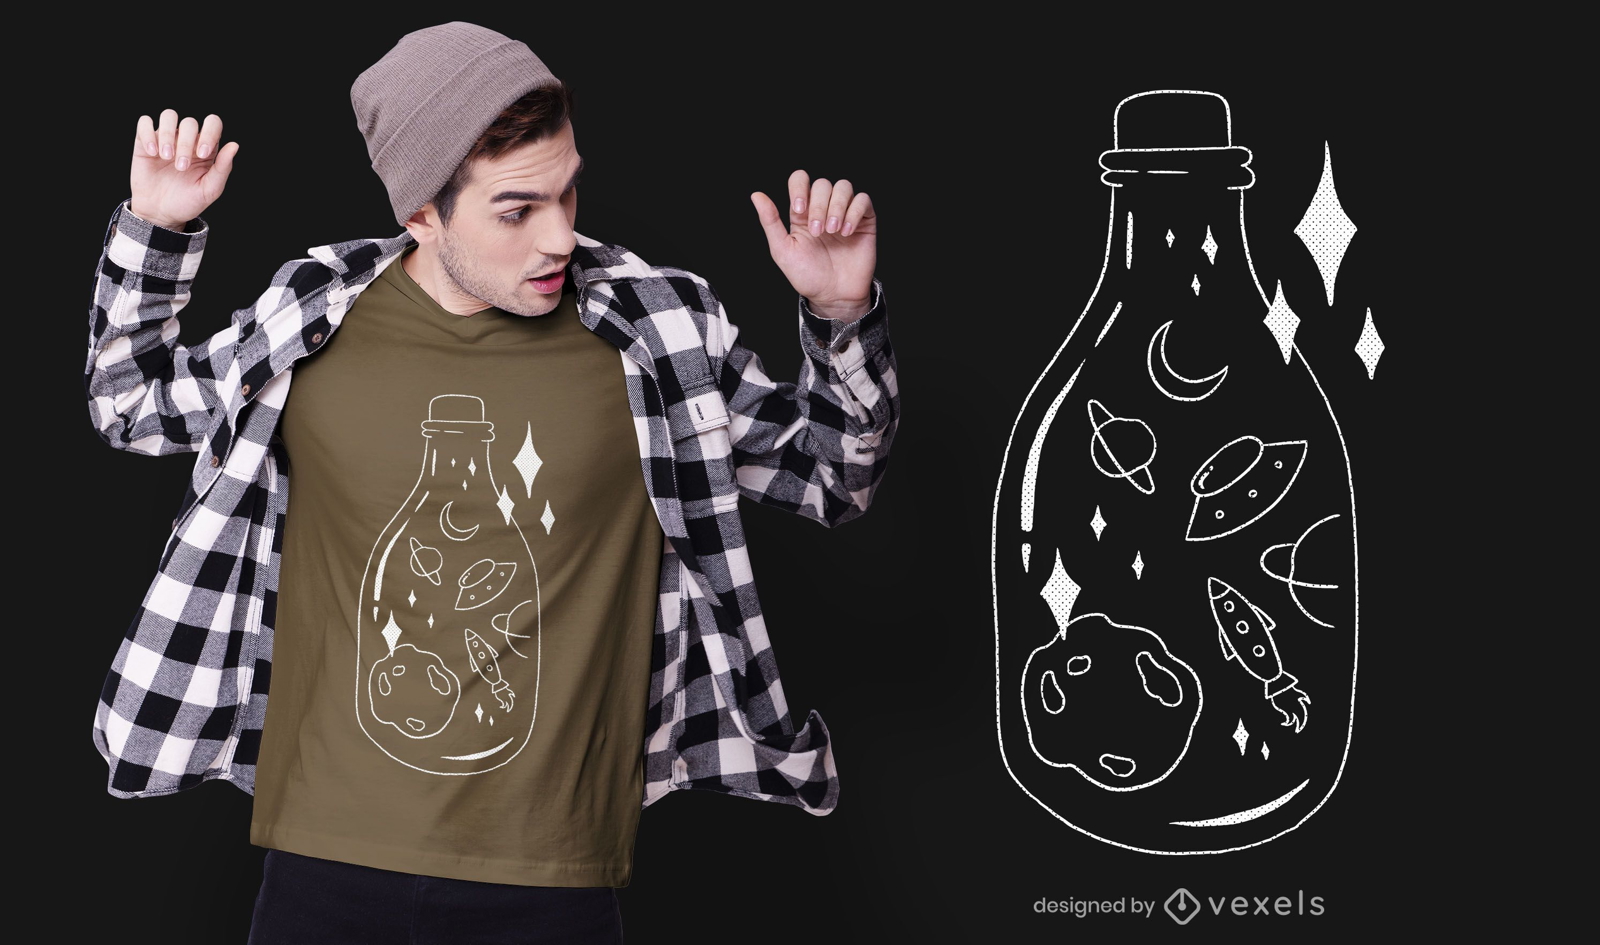 Space bottle t-shirt design